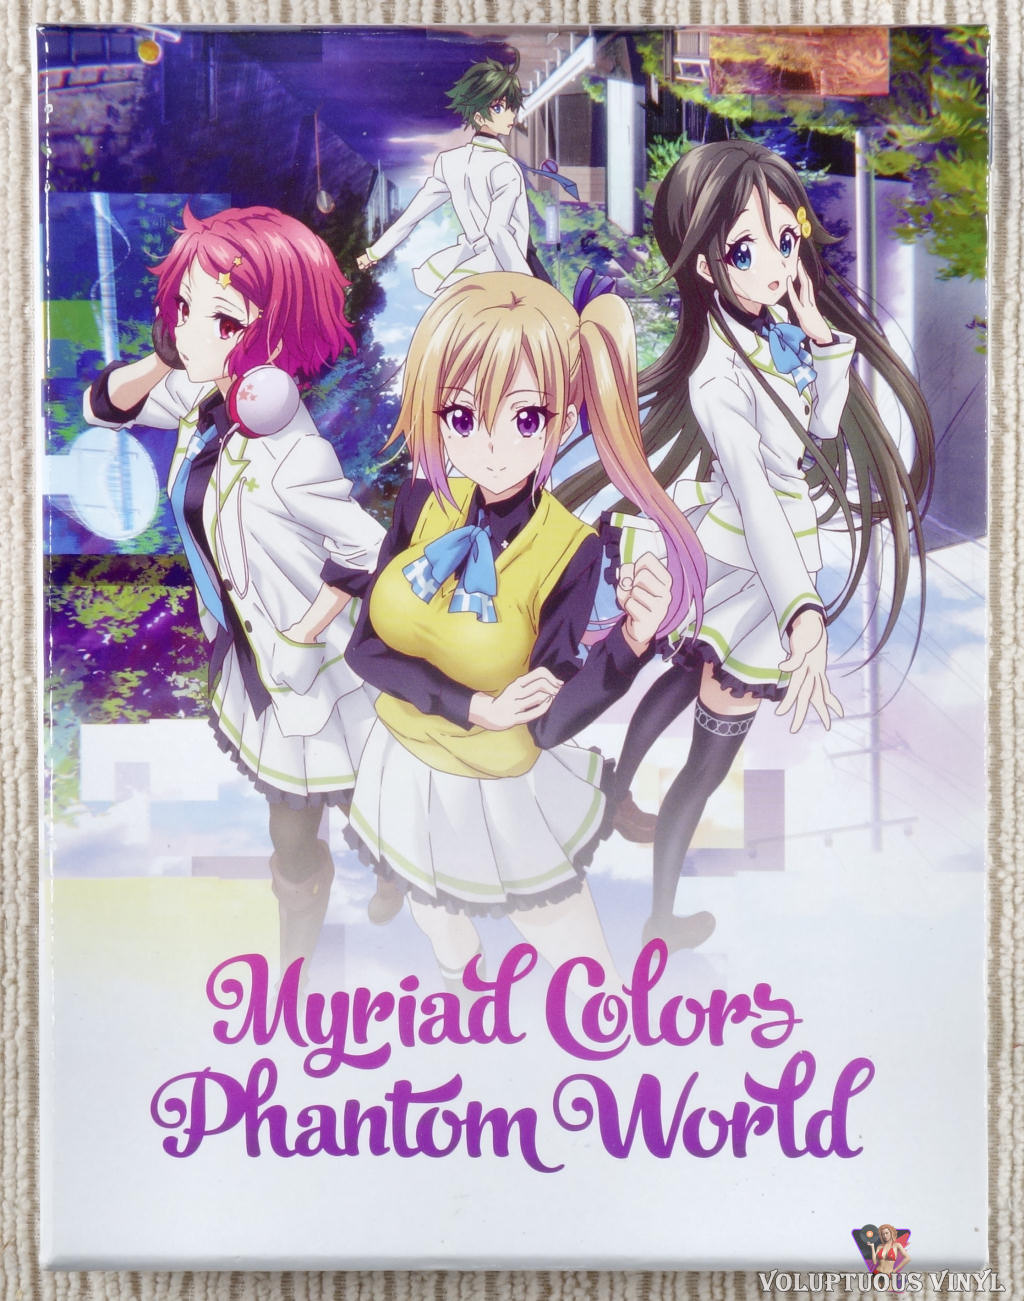 Myriad Colors Phantom World, Episode 1, The Age of Phantoms